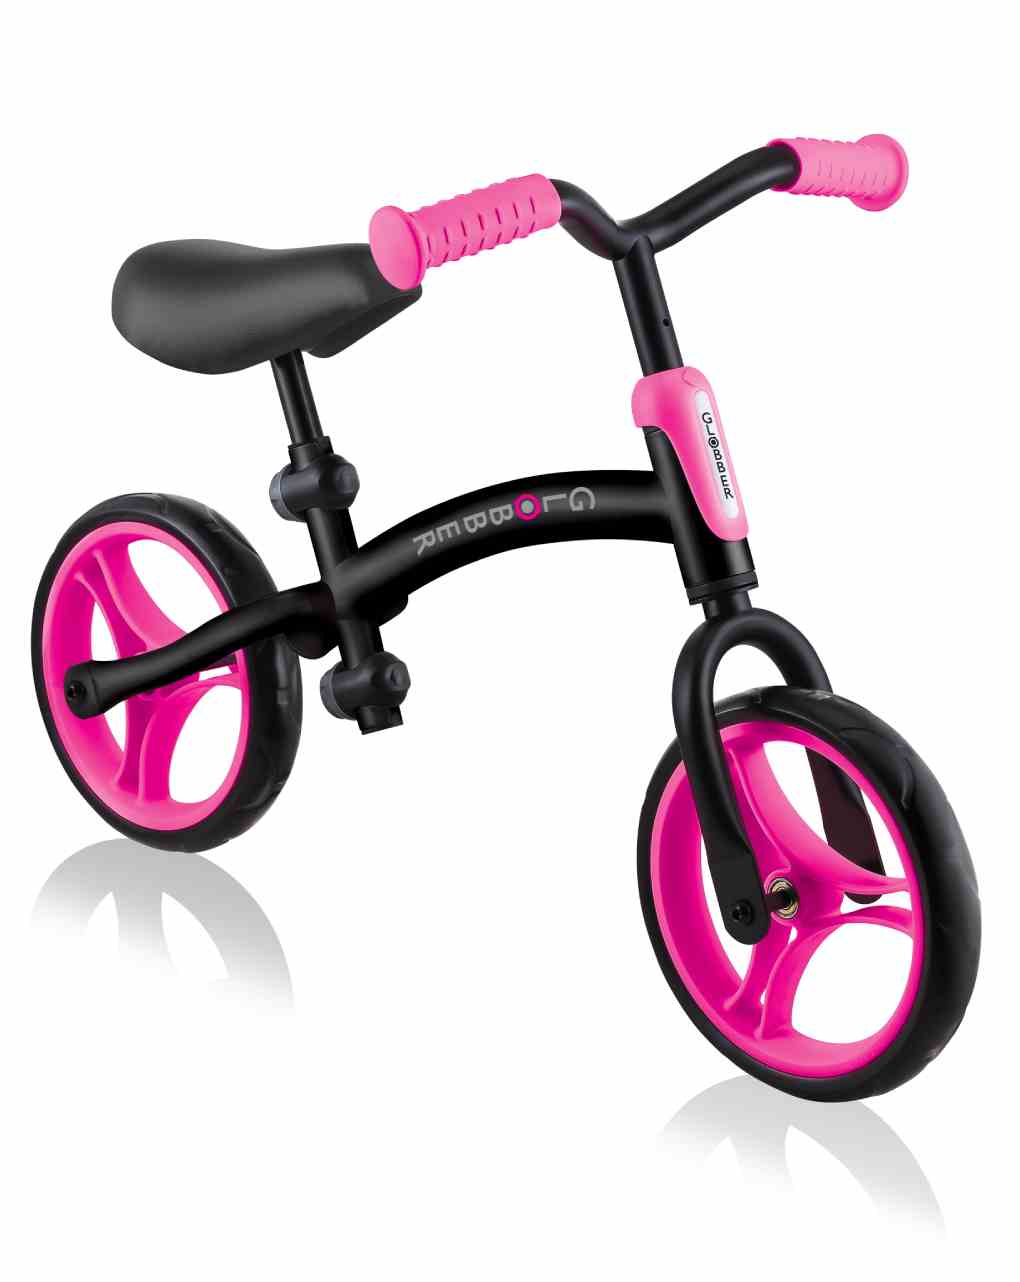 Bicicleta go - preto/rosa néon - globber - Globber